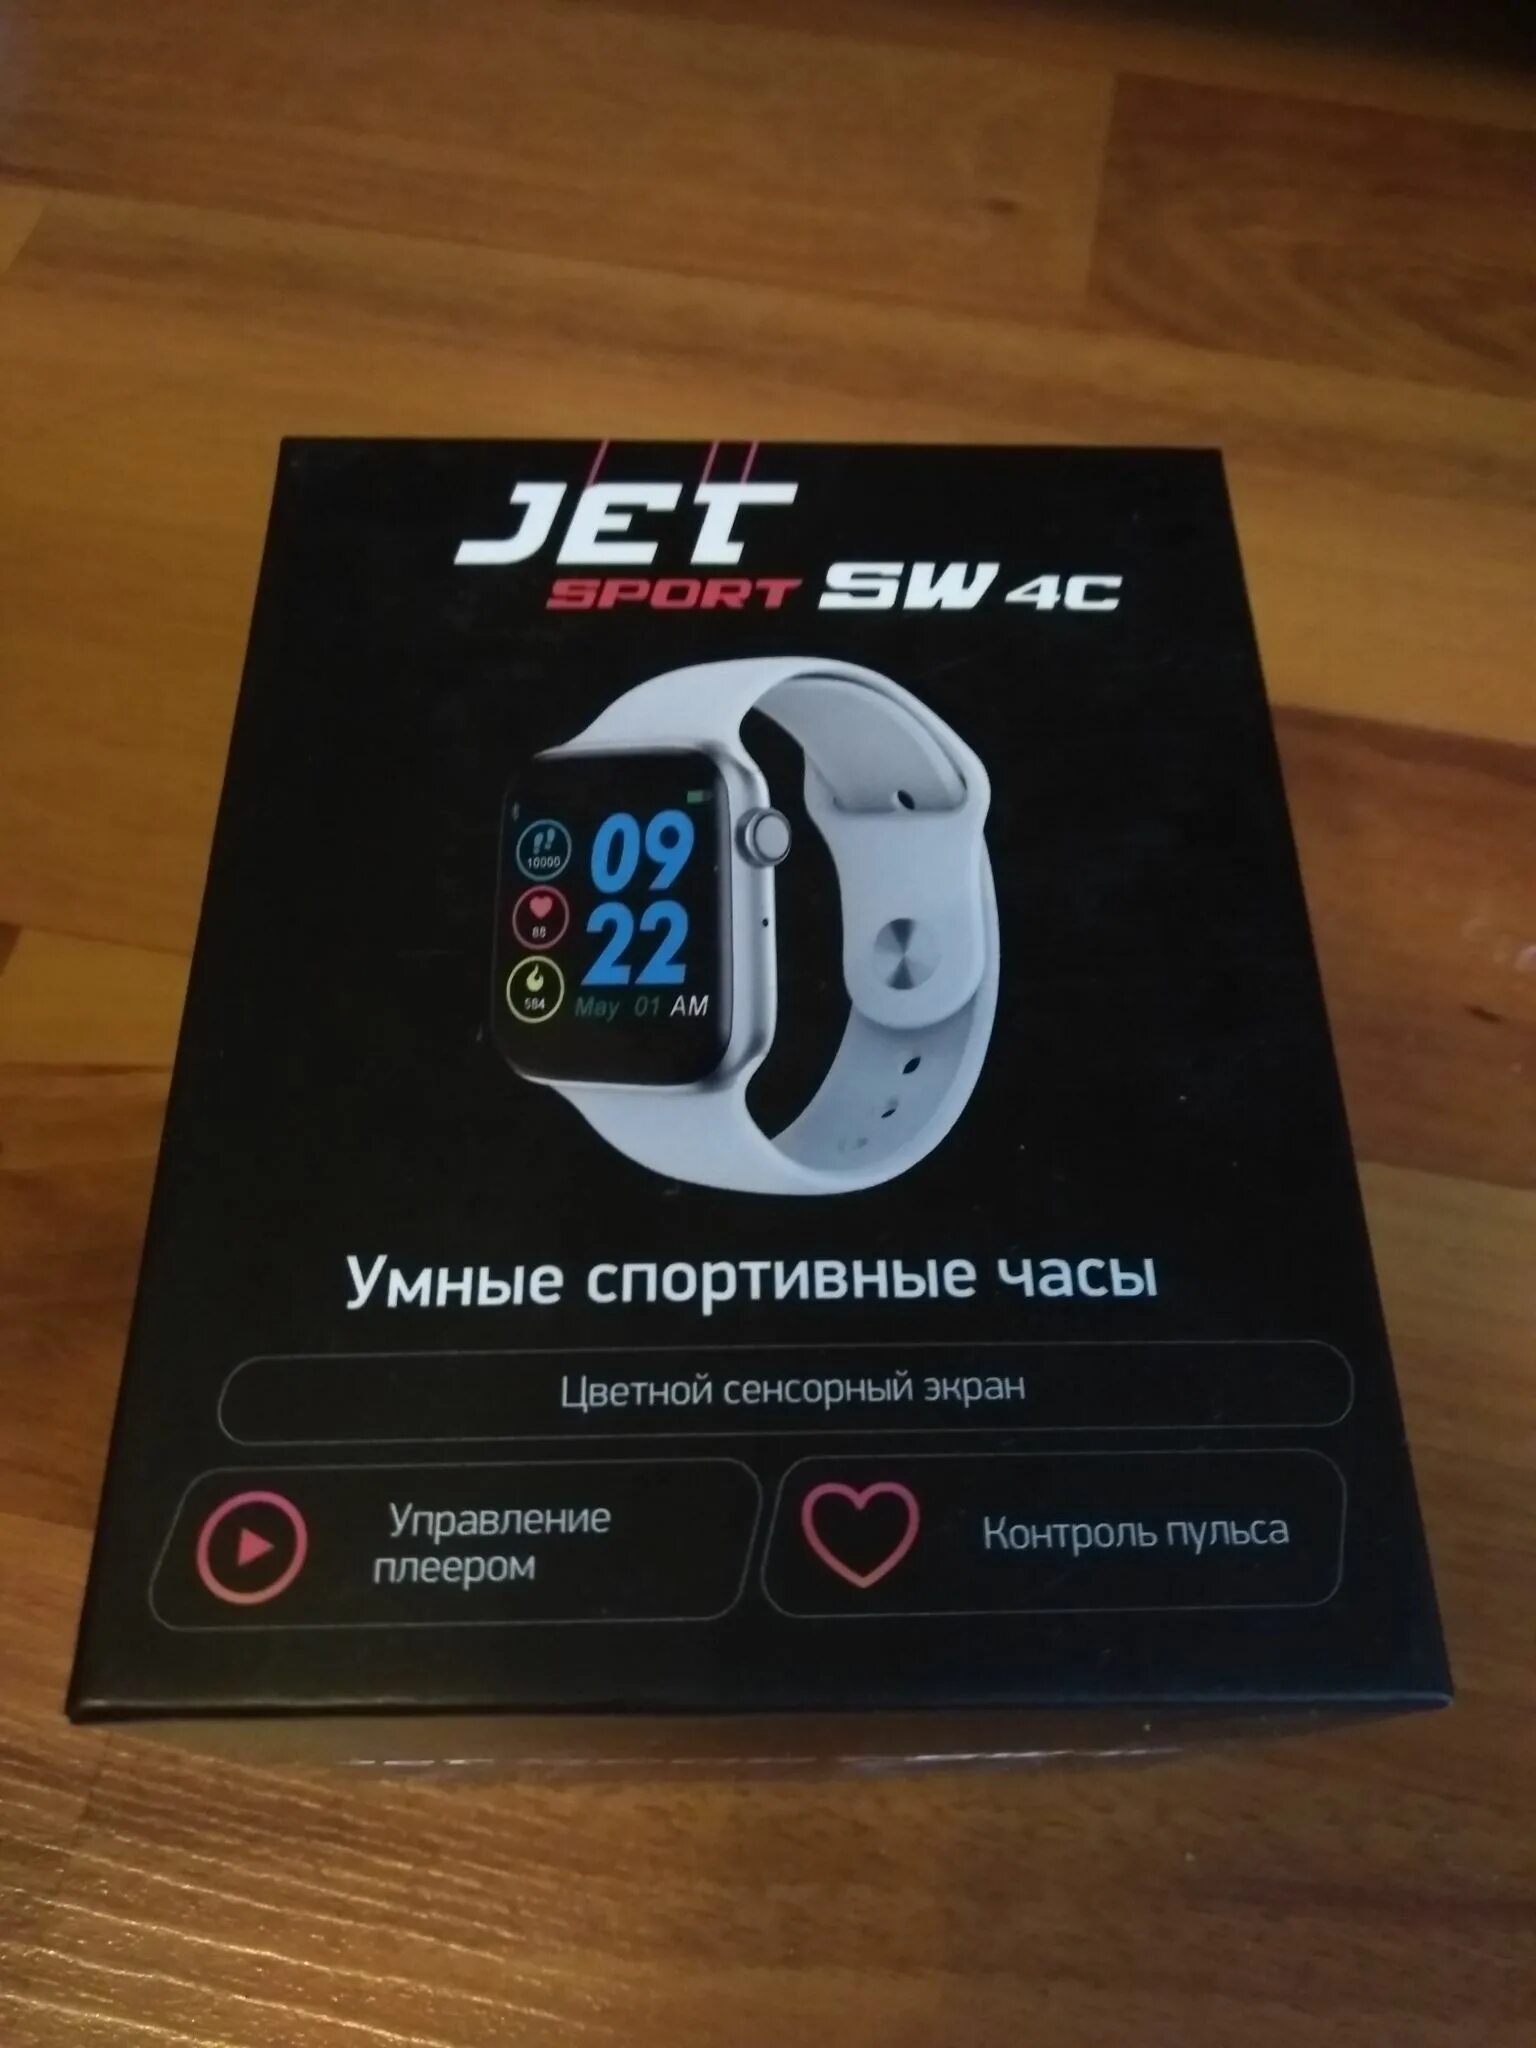 Jet Sport SW-4c. Смарт Jet Sport sw4. Спортивные часы Jet Sport SW-4c. Jet Sport SW-4c Silver. Jet sport 4